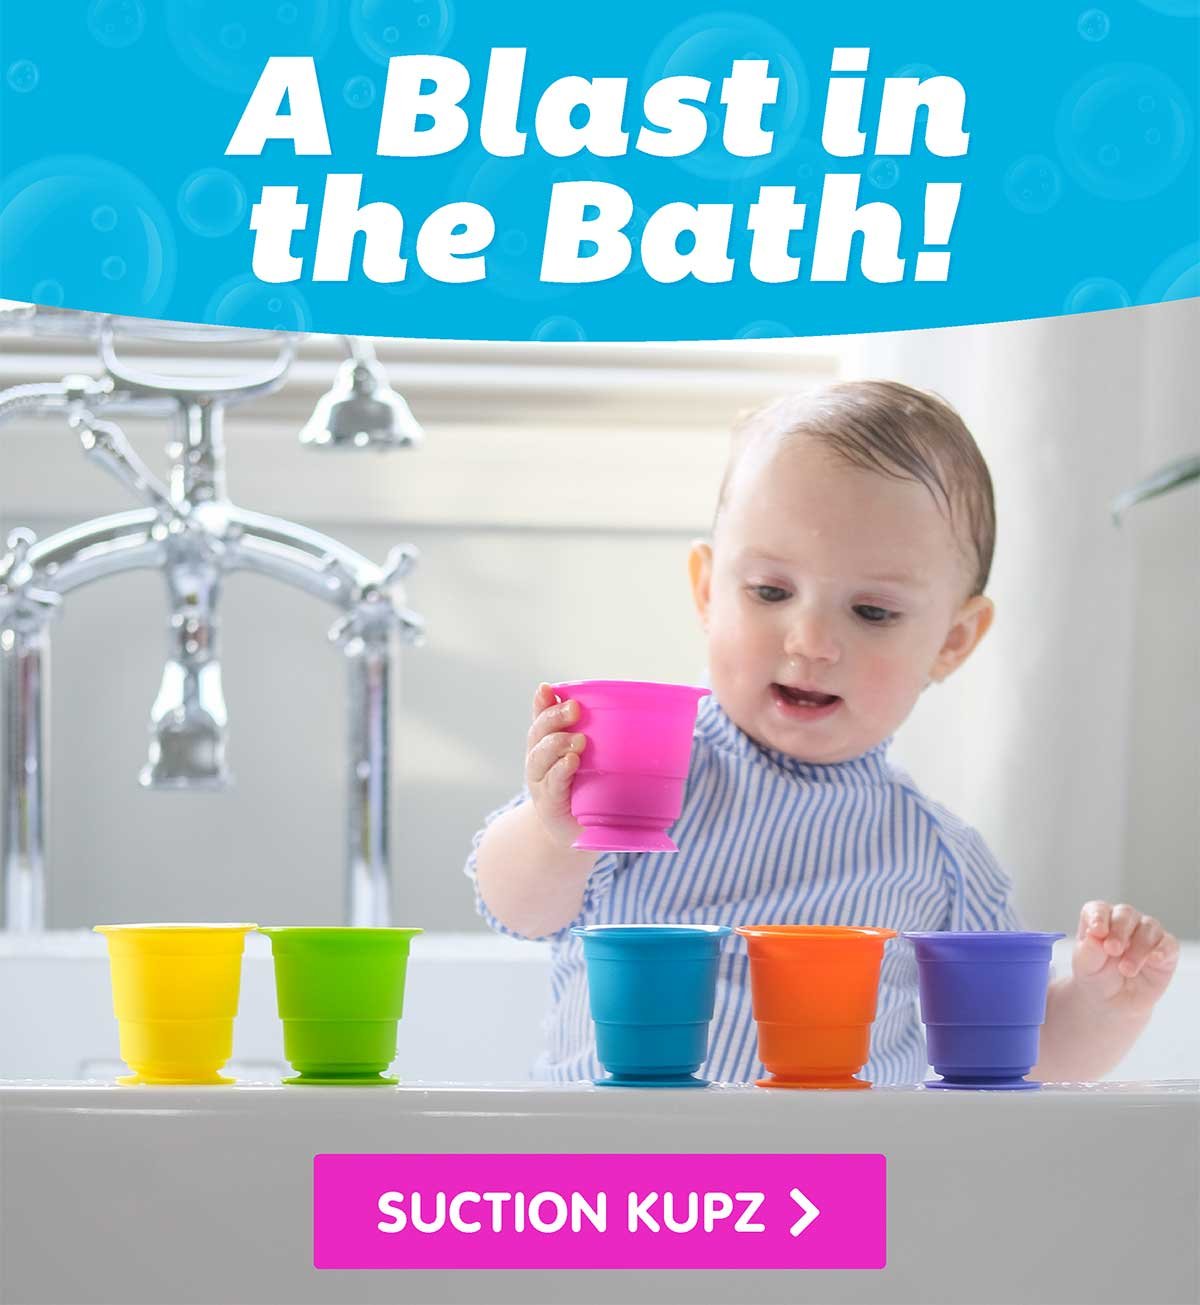 A Blast in the Bath! Suction Kupz - Shop Now!